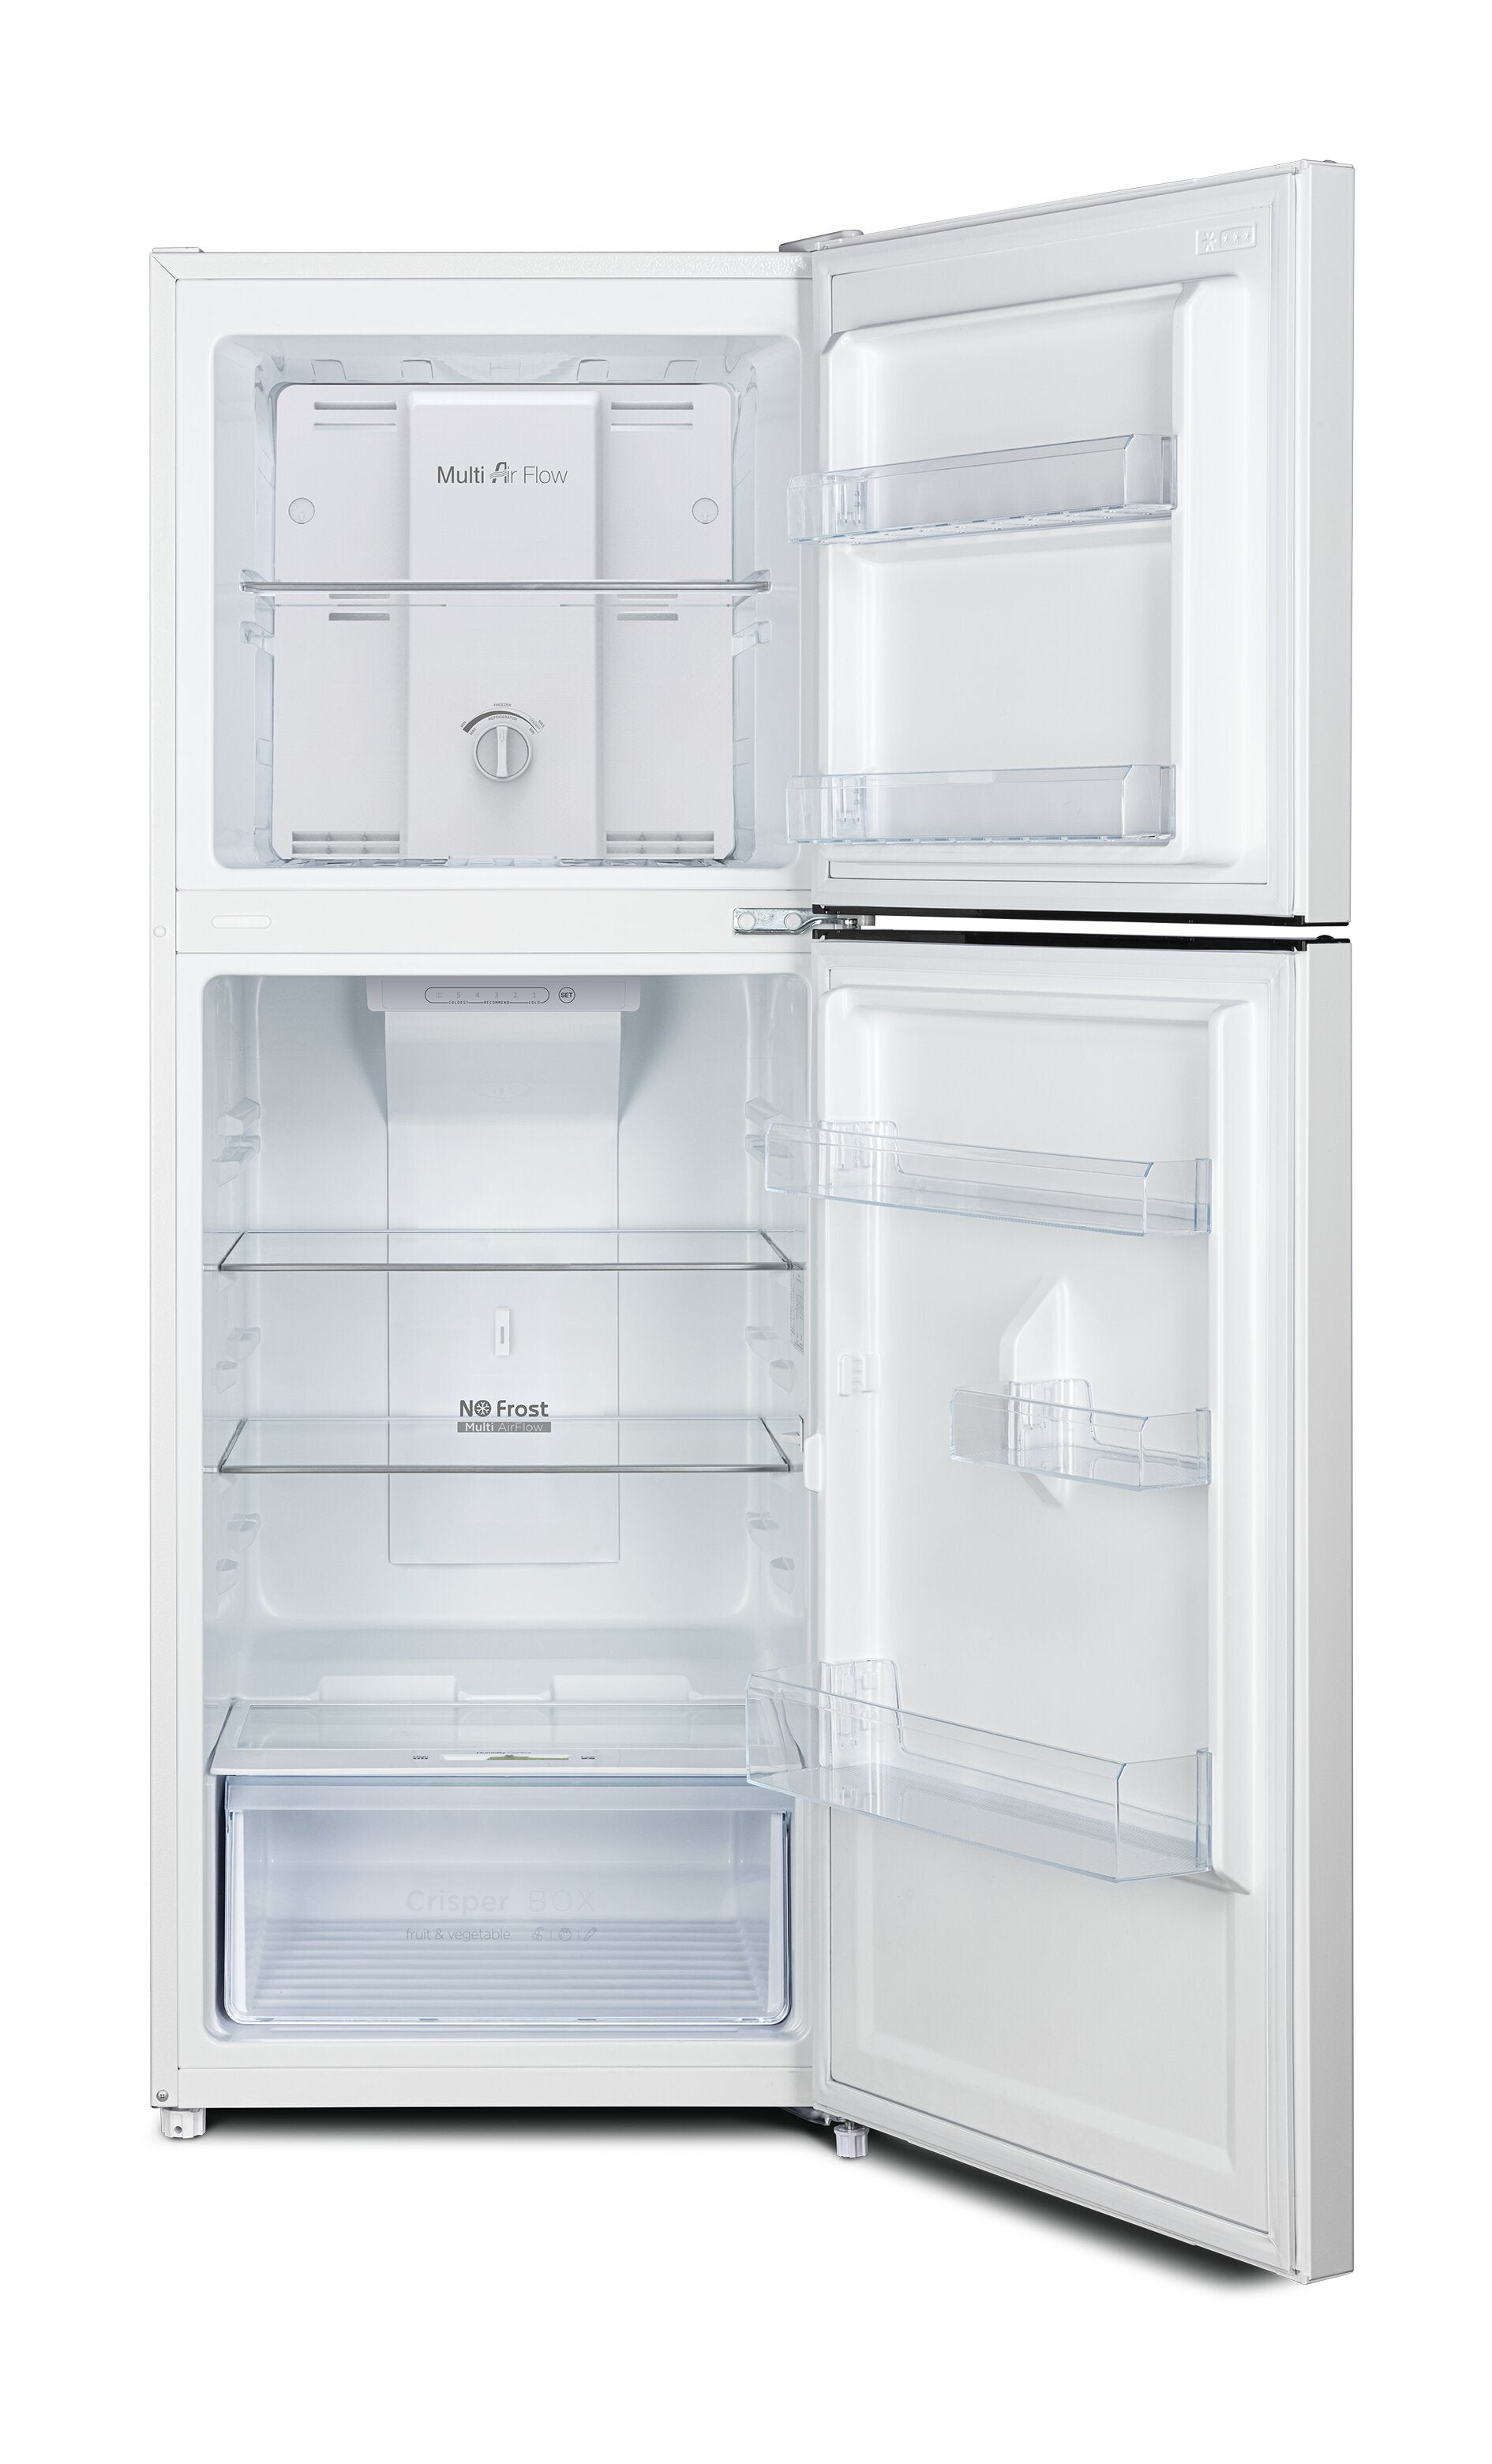 CHiQ 202L Top Mount Refrigerator